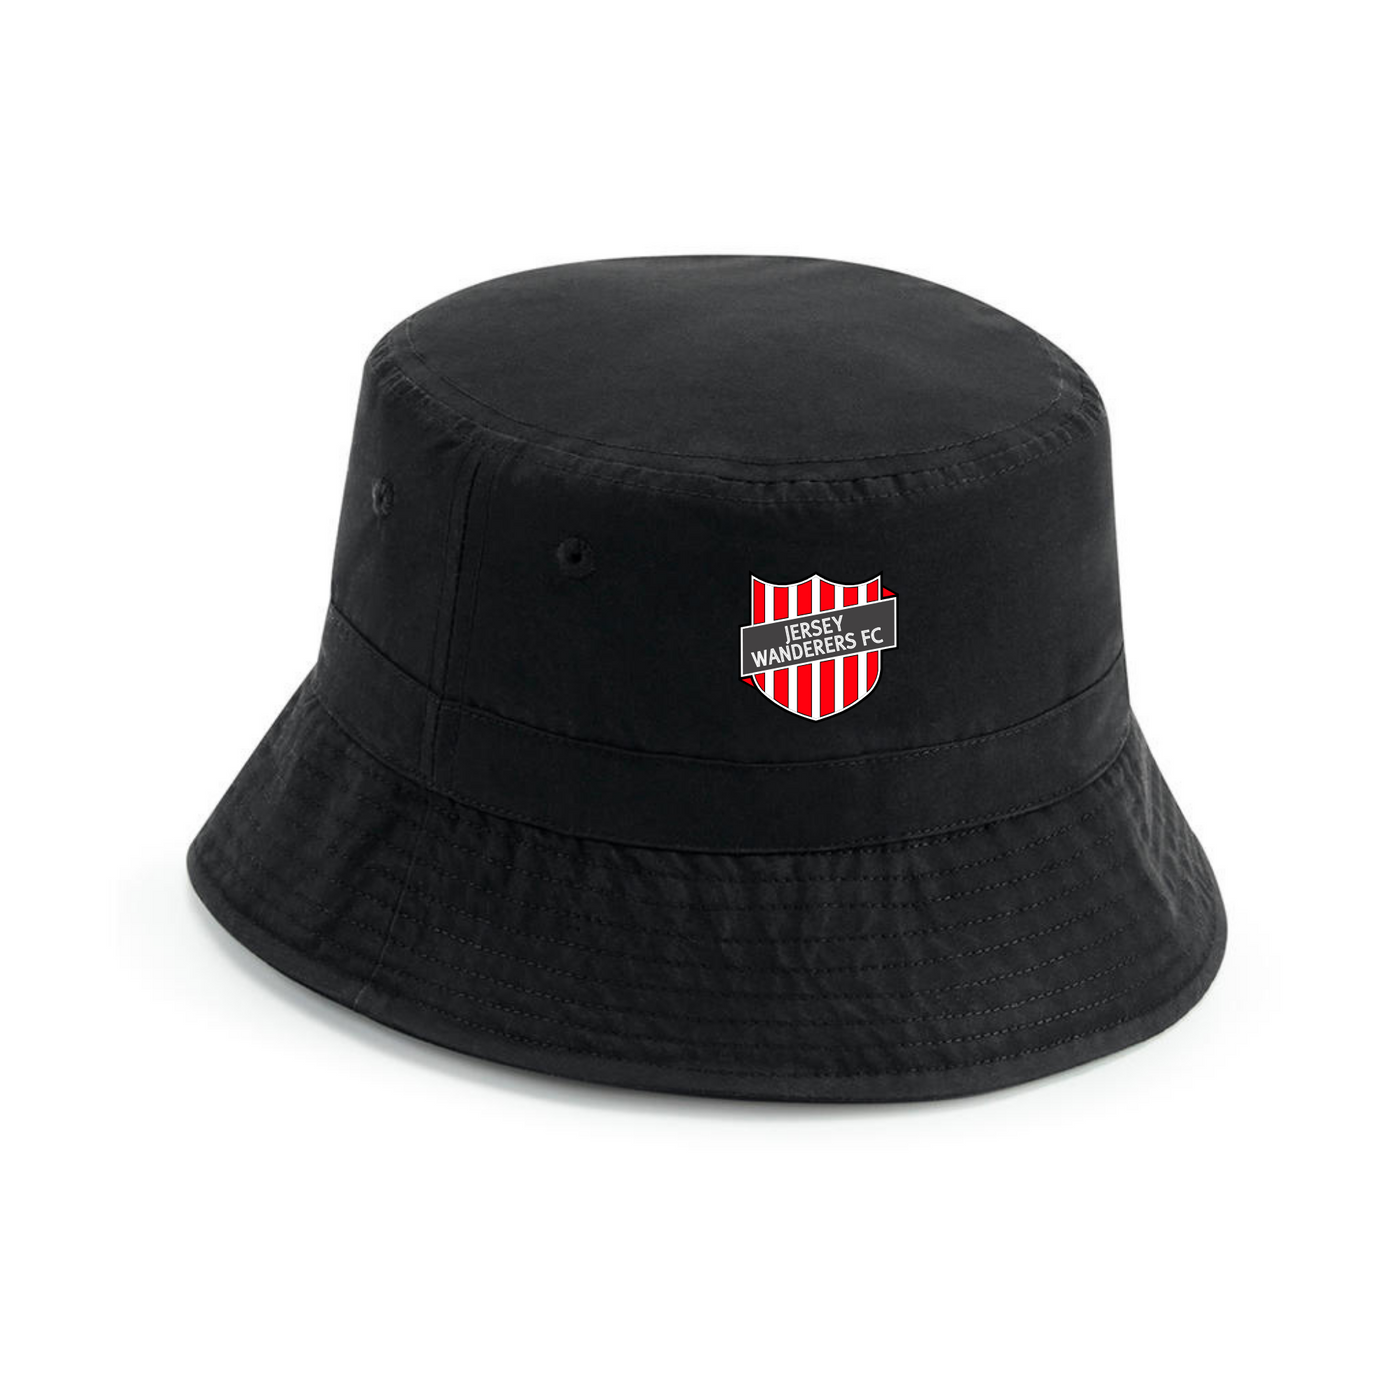 Jersey Wanderers Bucket Hat